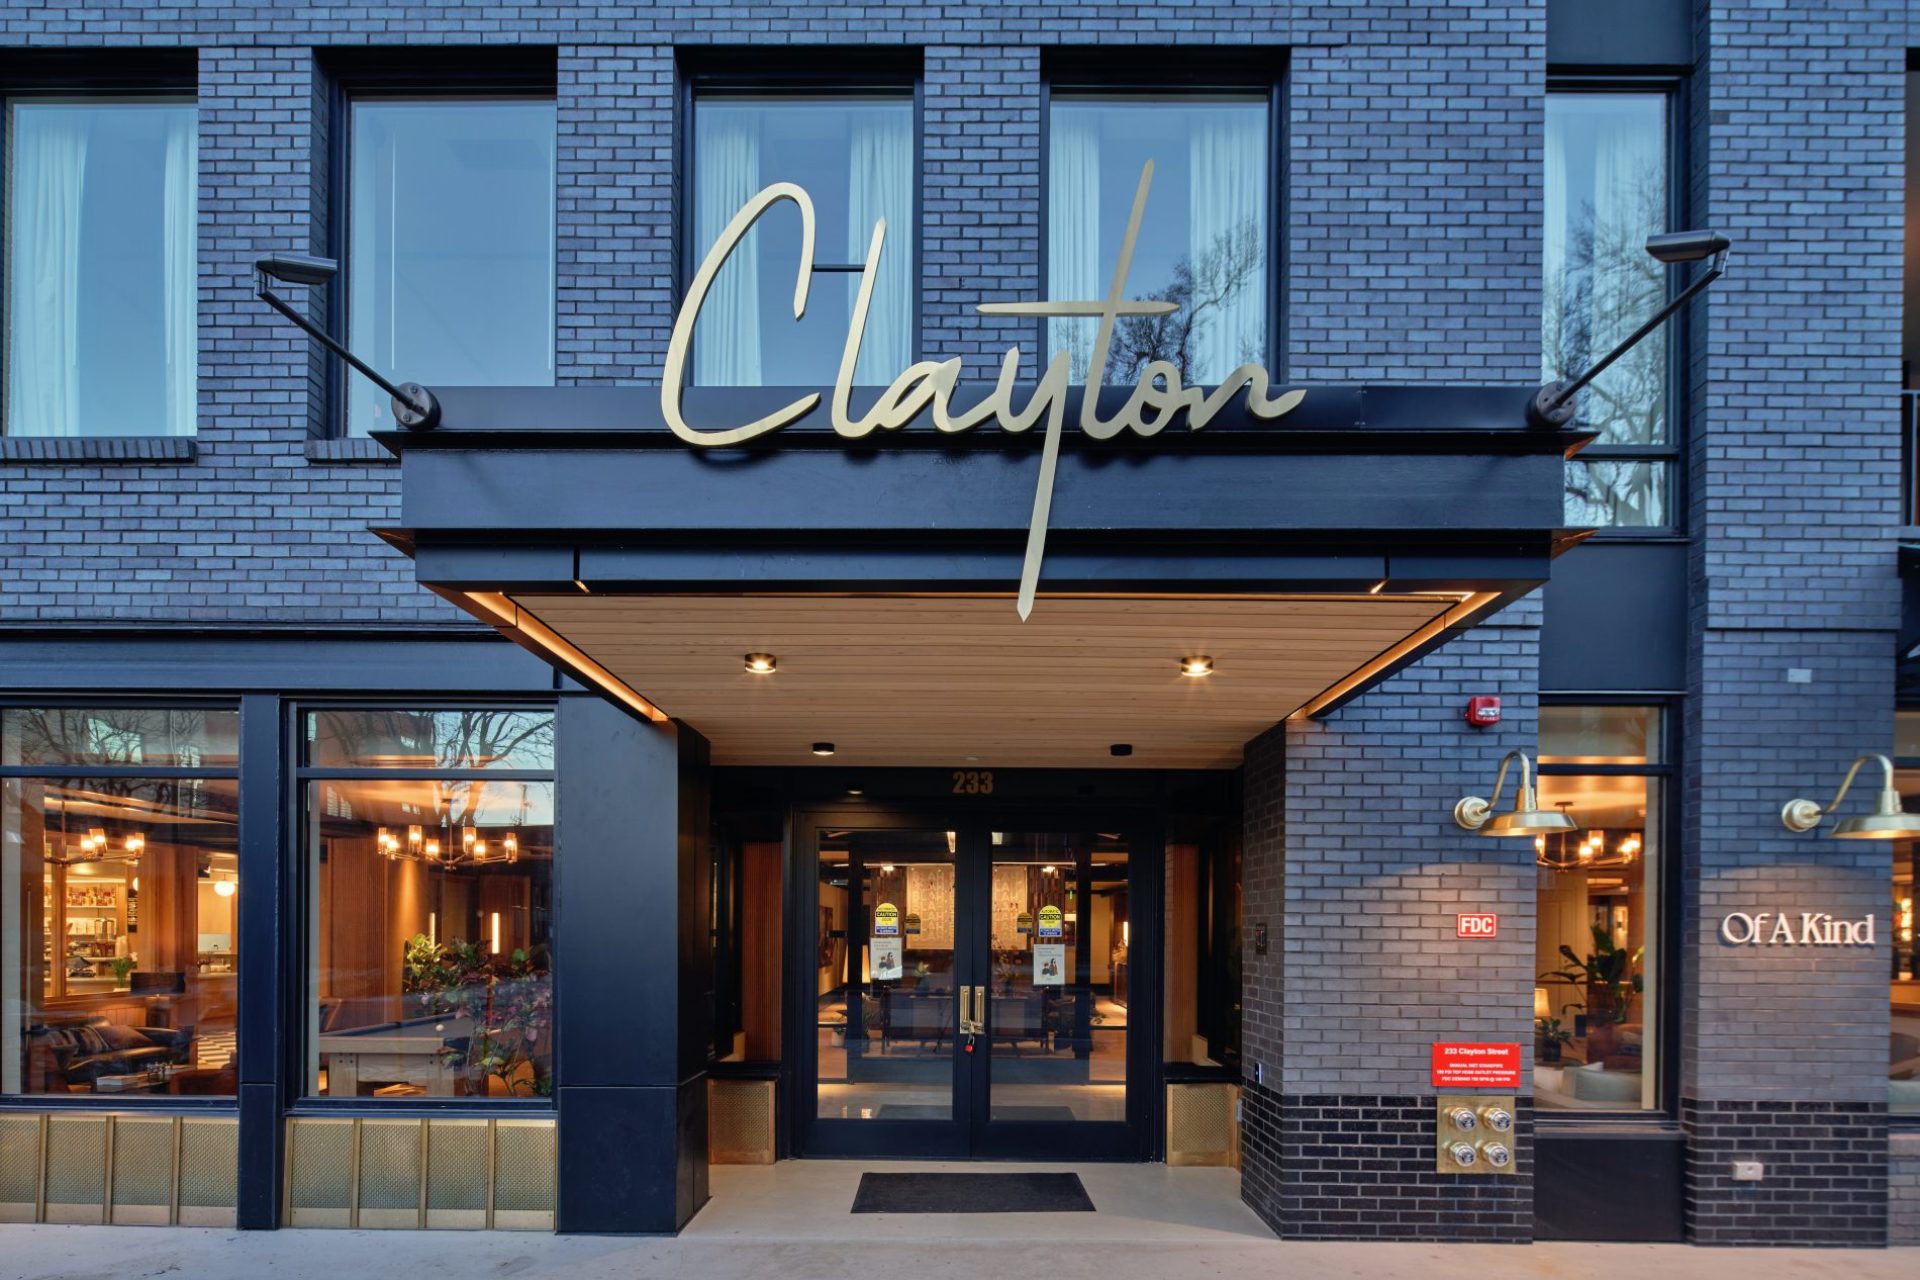 Entrance to Clayton Hotel in Denver, CO